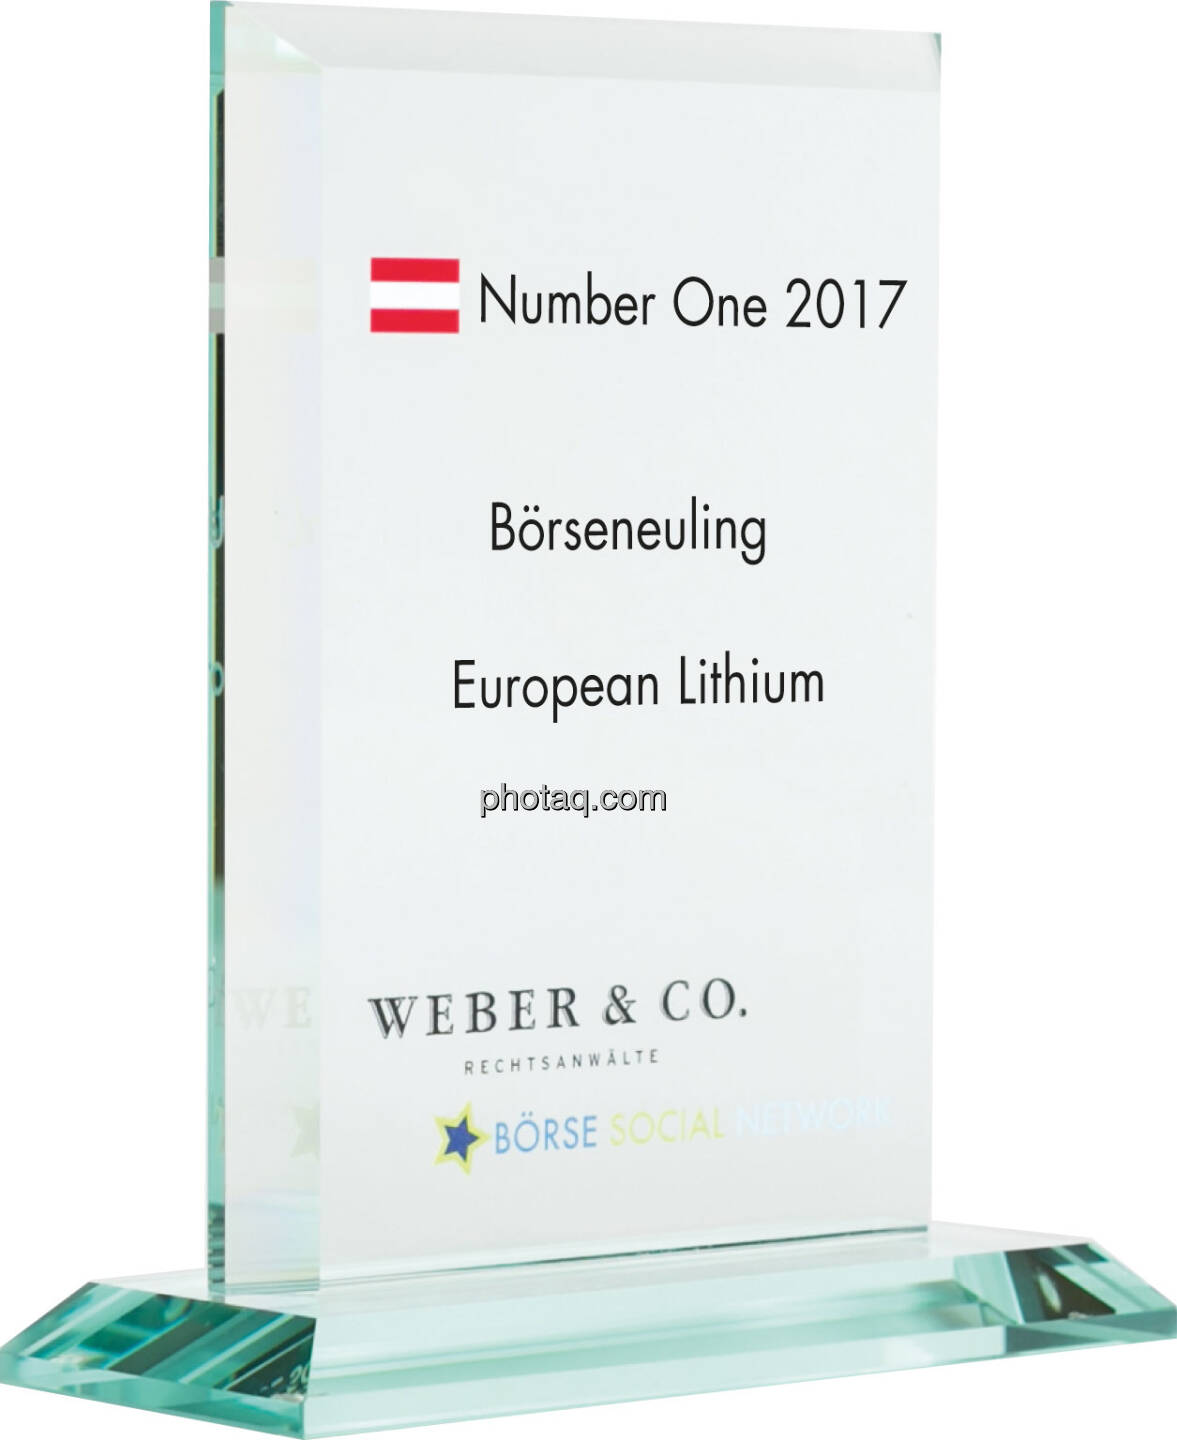 Number One Awards 2017 - Börseneuling - European Lithium